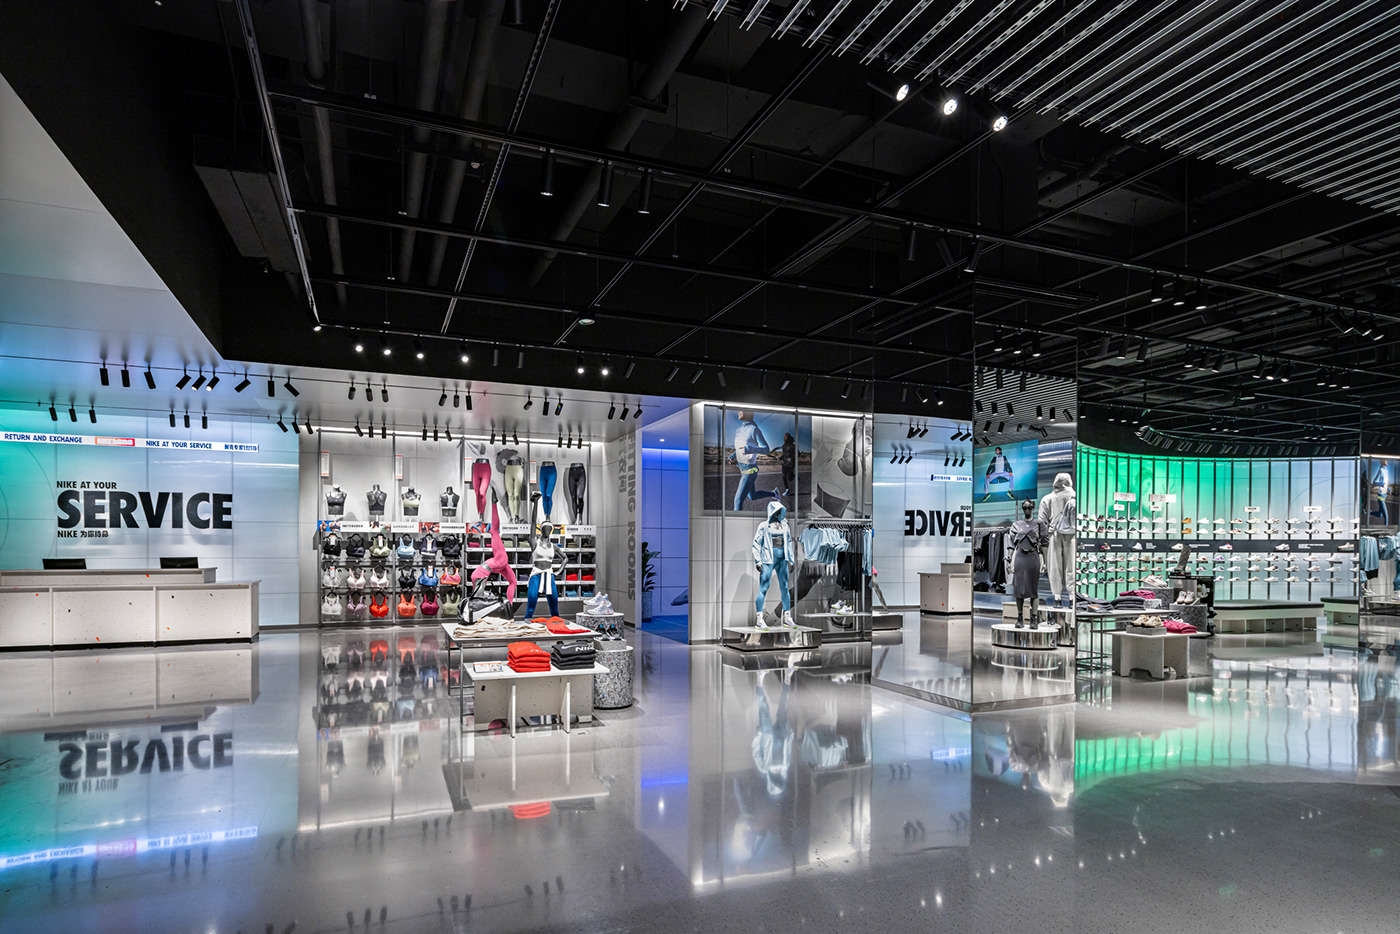 interior design  Nike Retail sport